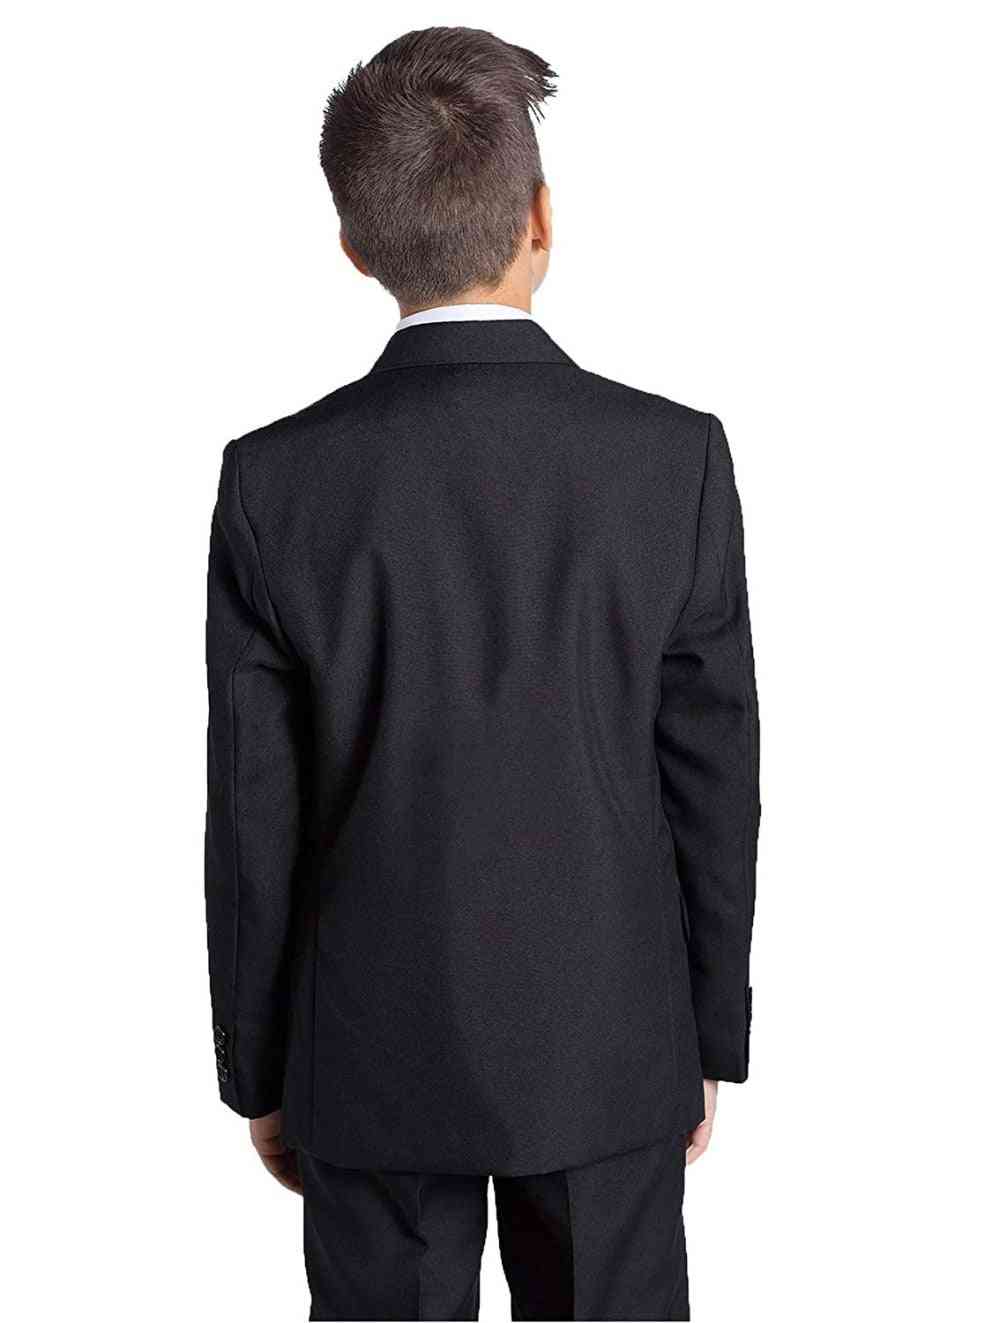 Tuxedo Fist Communication Party Wear Suit For Boy's